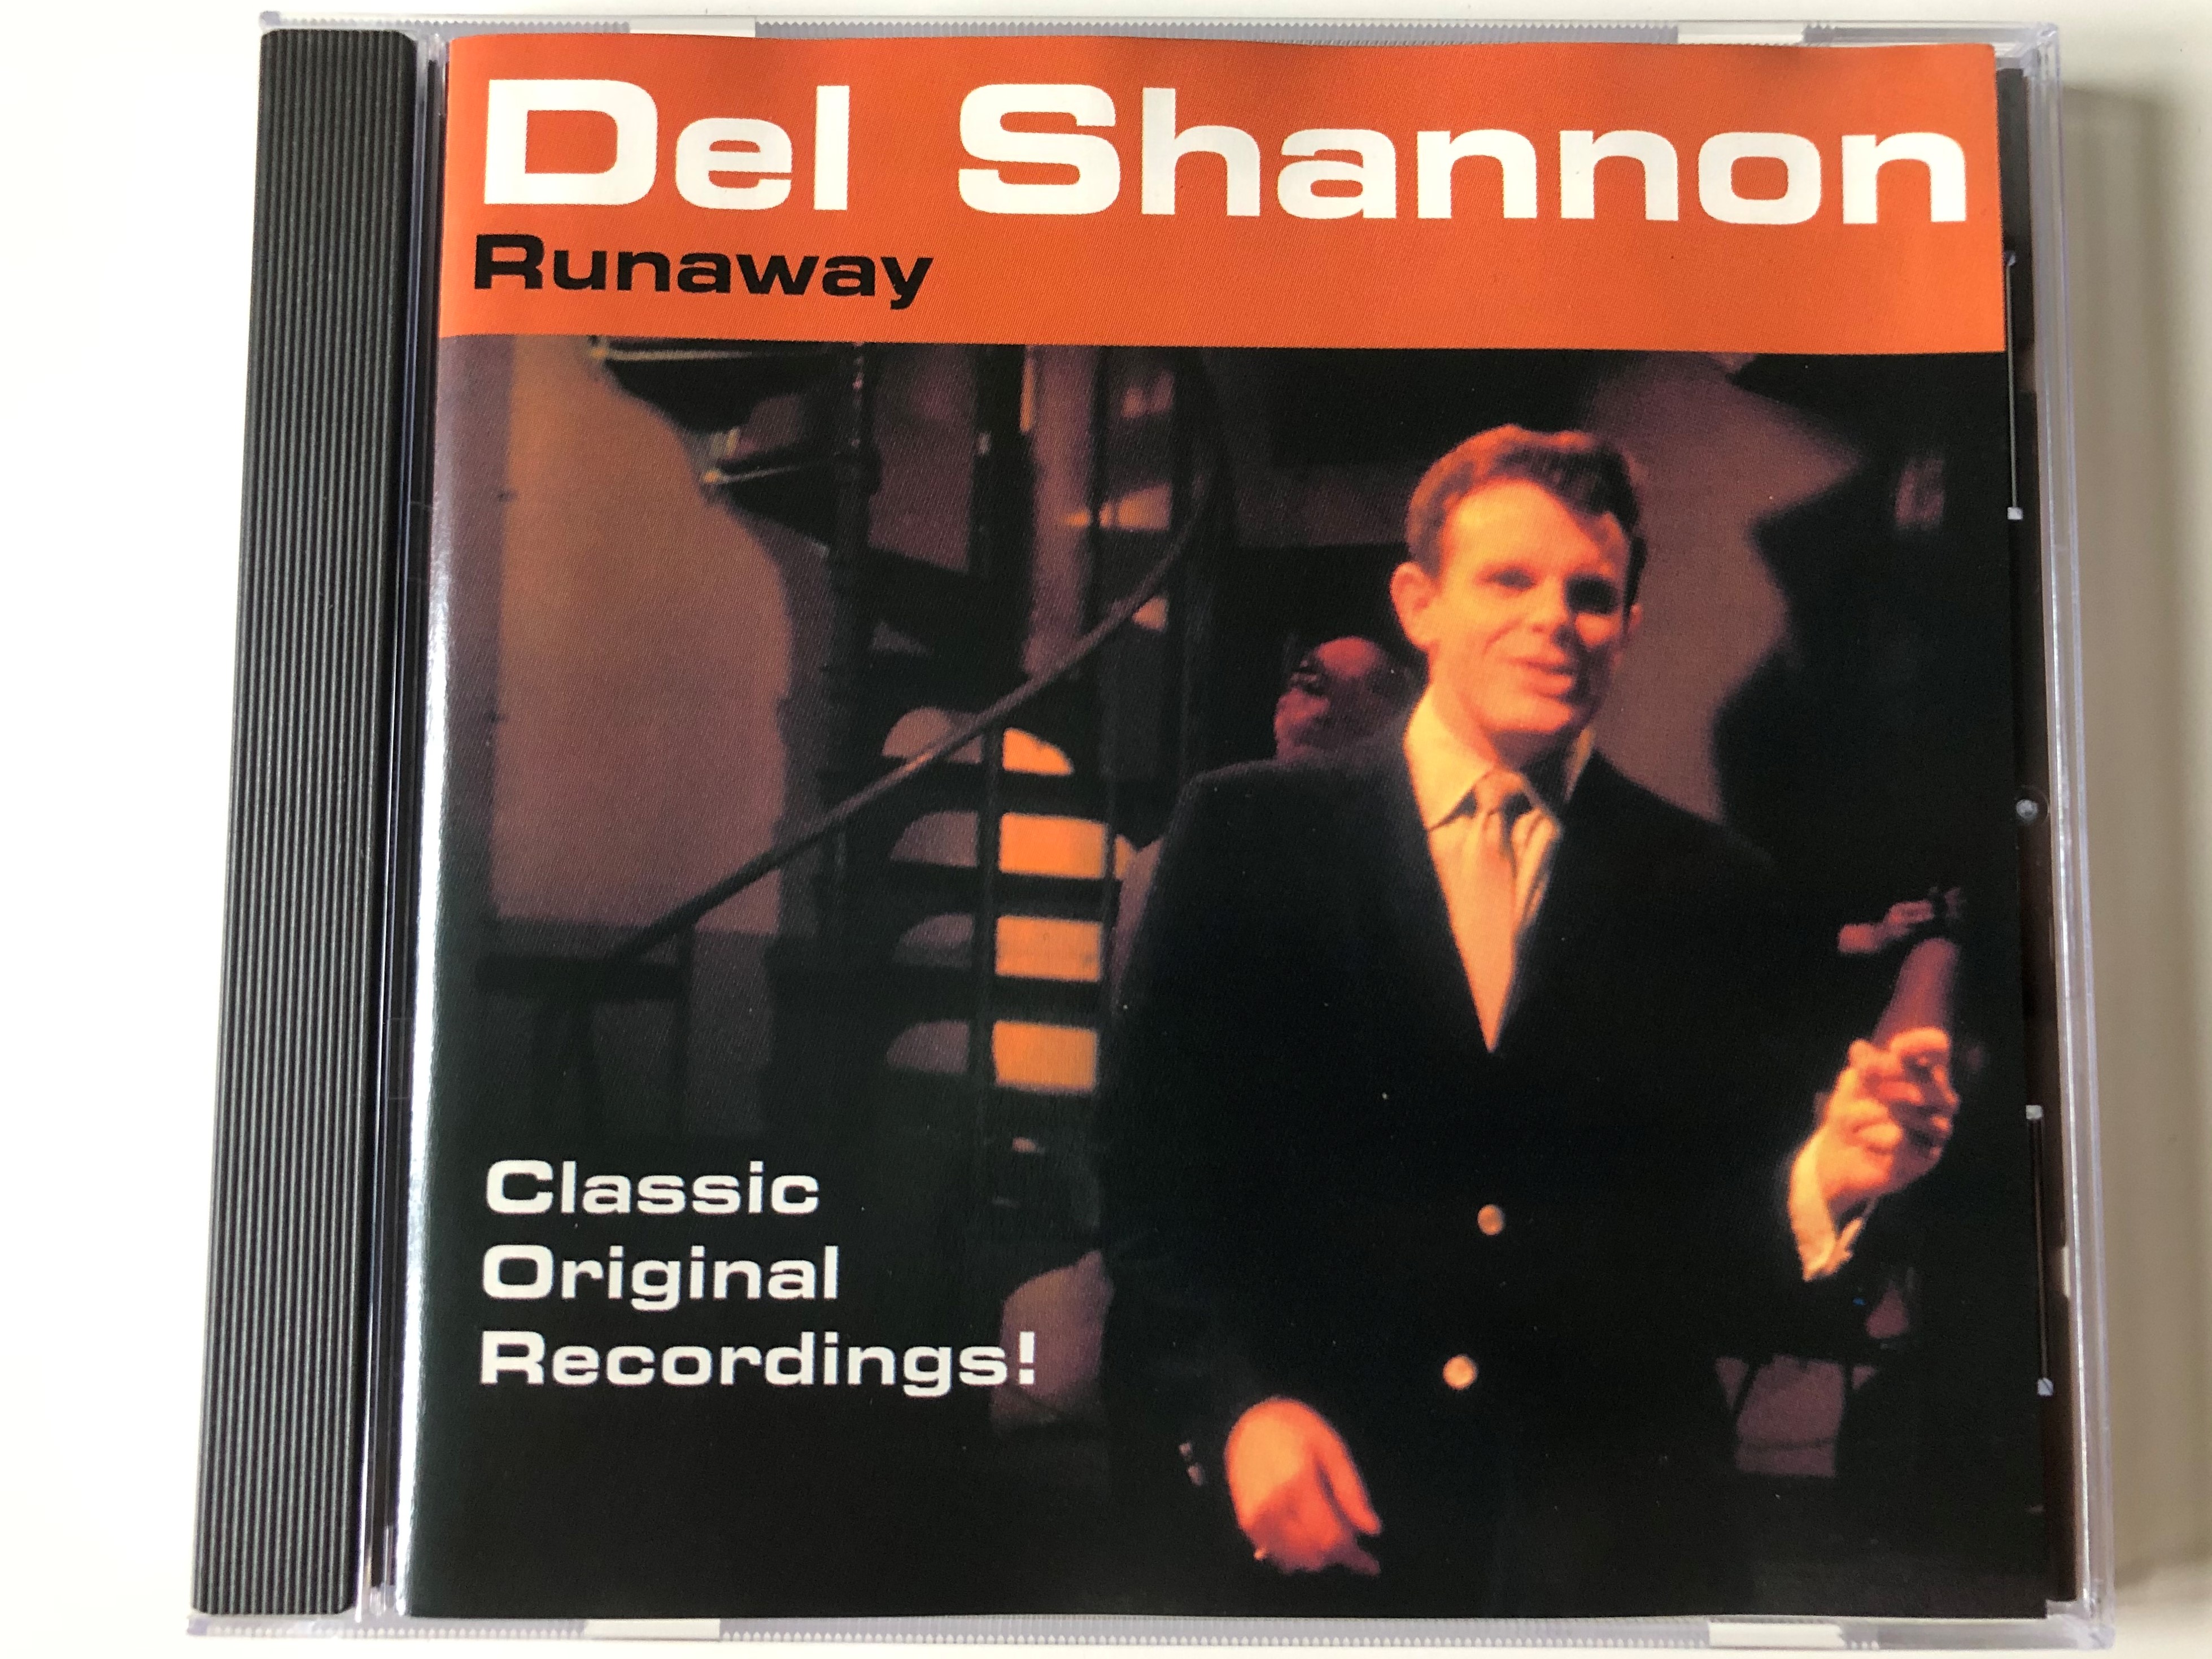 del-shannon-runaway-classic-original-recordings-fmcg-audio-cd-1997-fmc032-1-.jpg